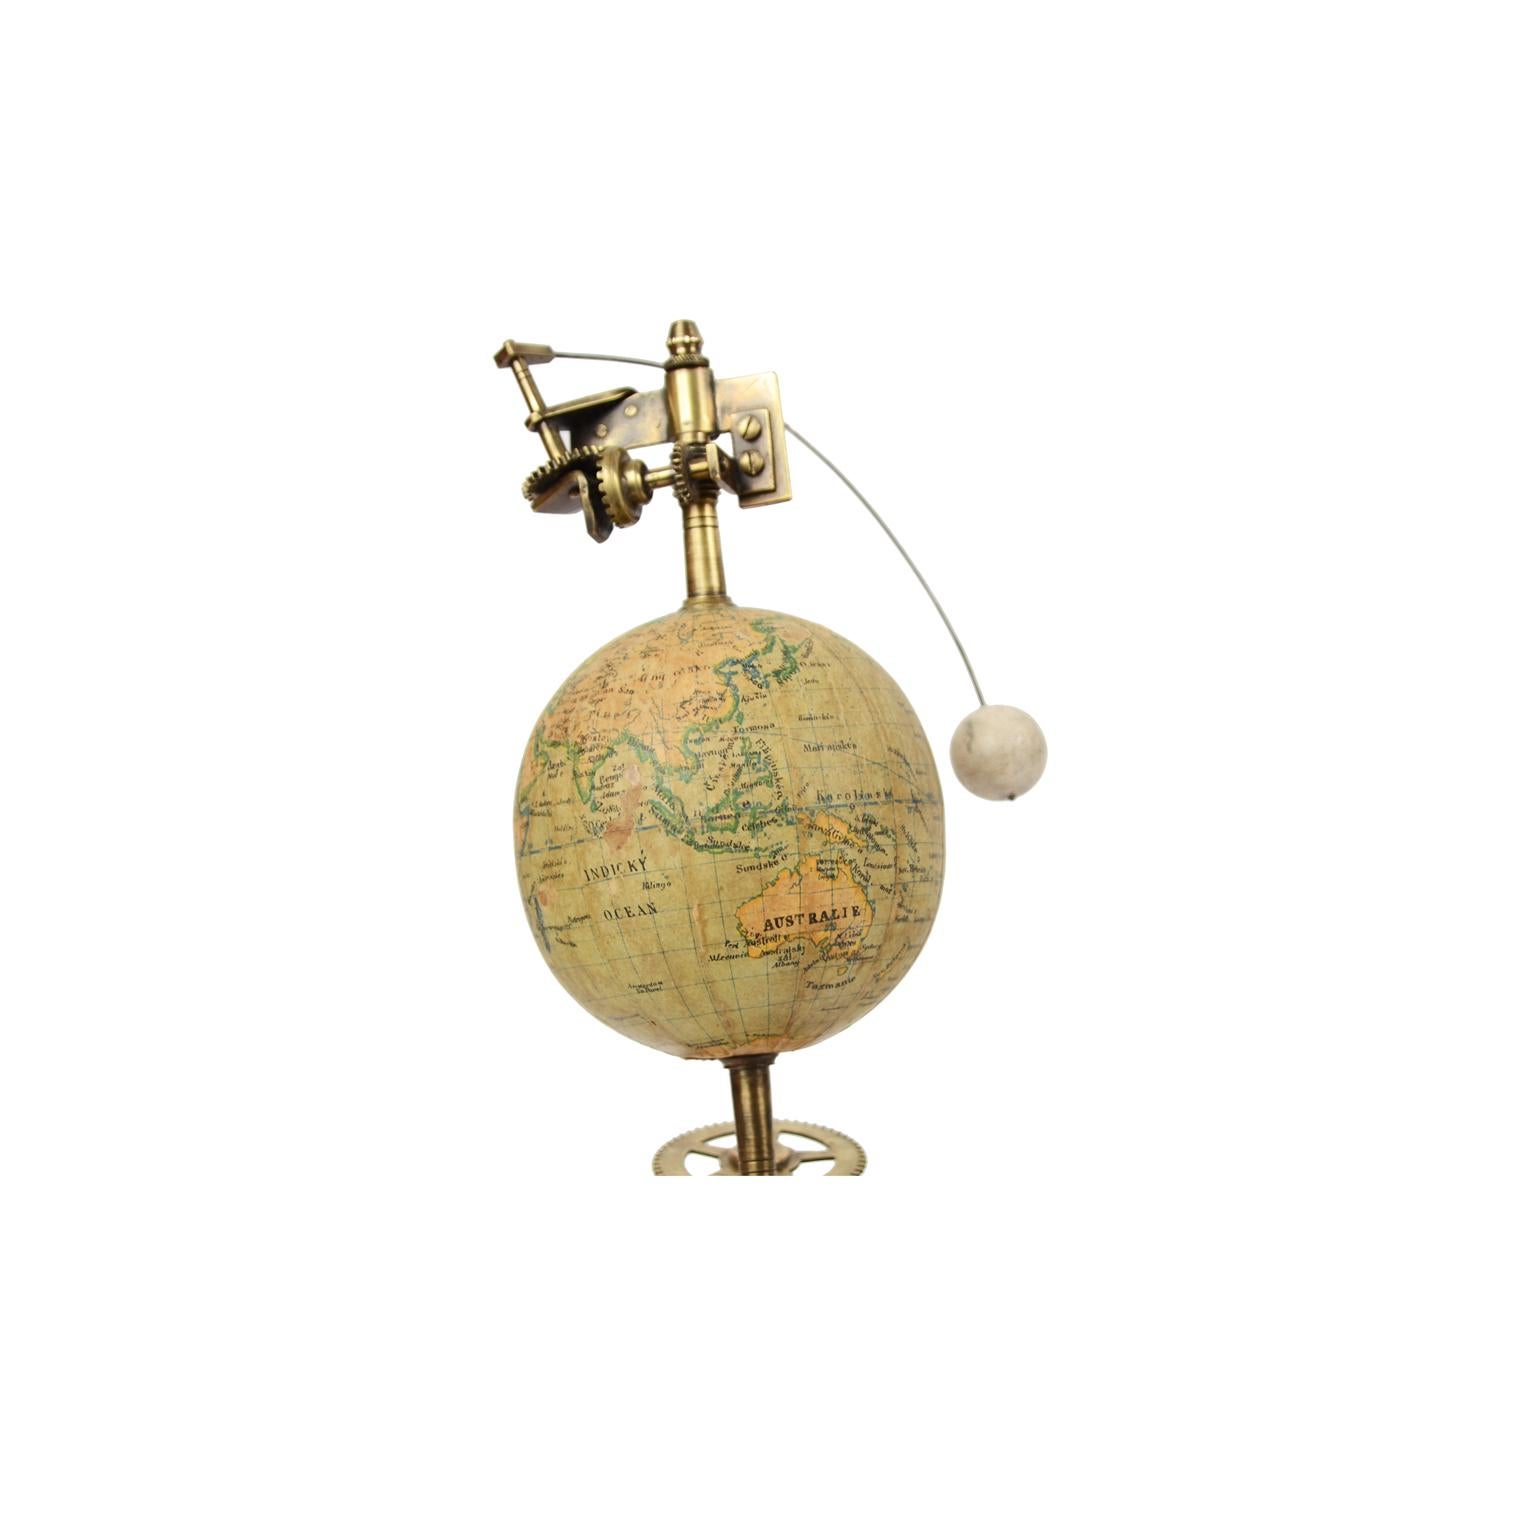 Czech Antique Rare Mechanical Orrery, Astronomical Instrument  by Jan Felkl Praga 1870